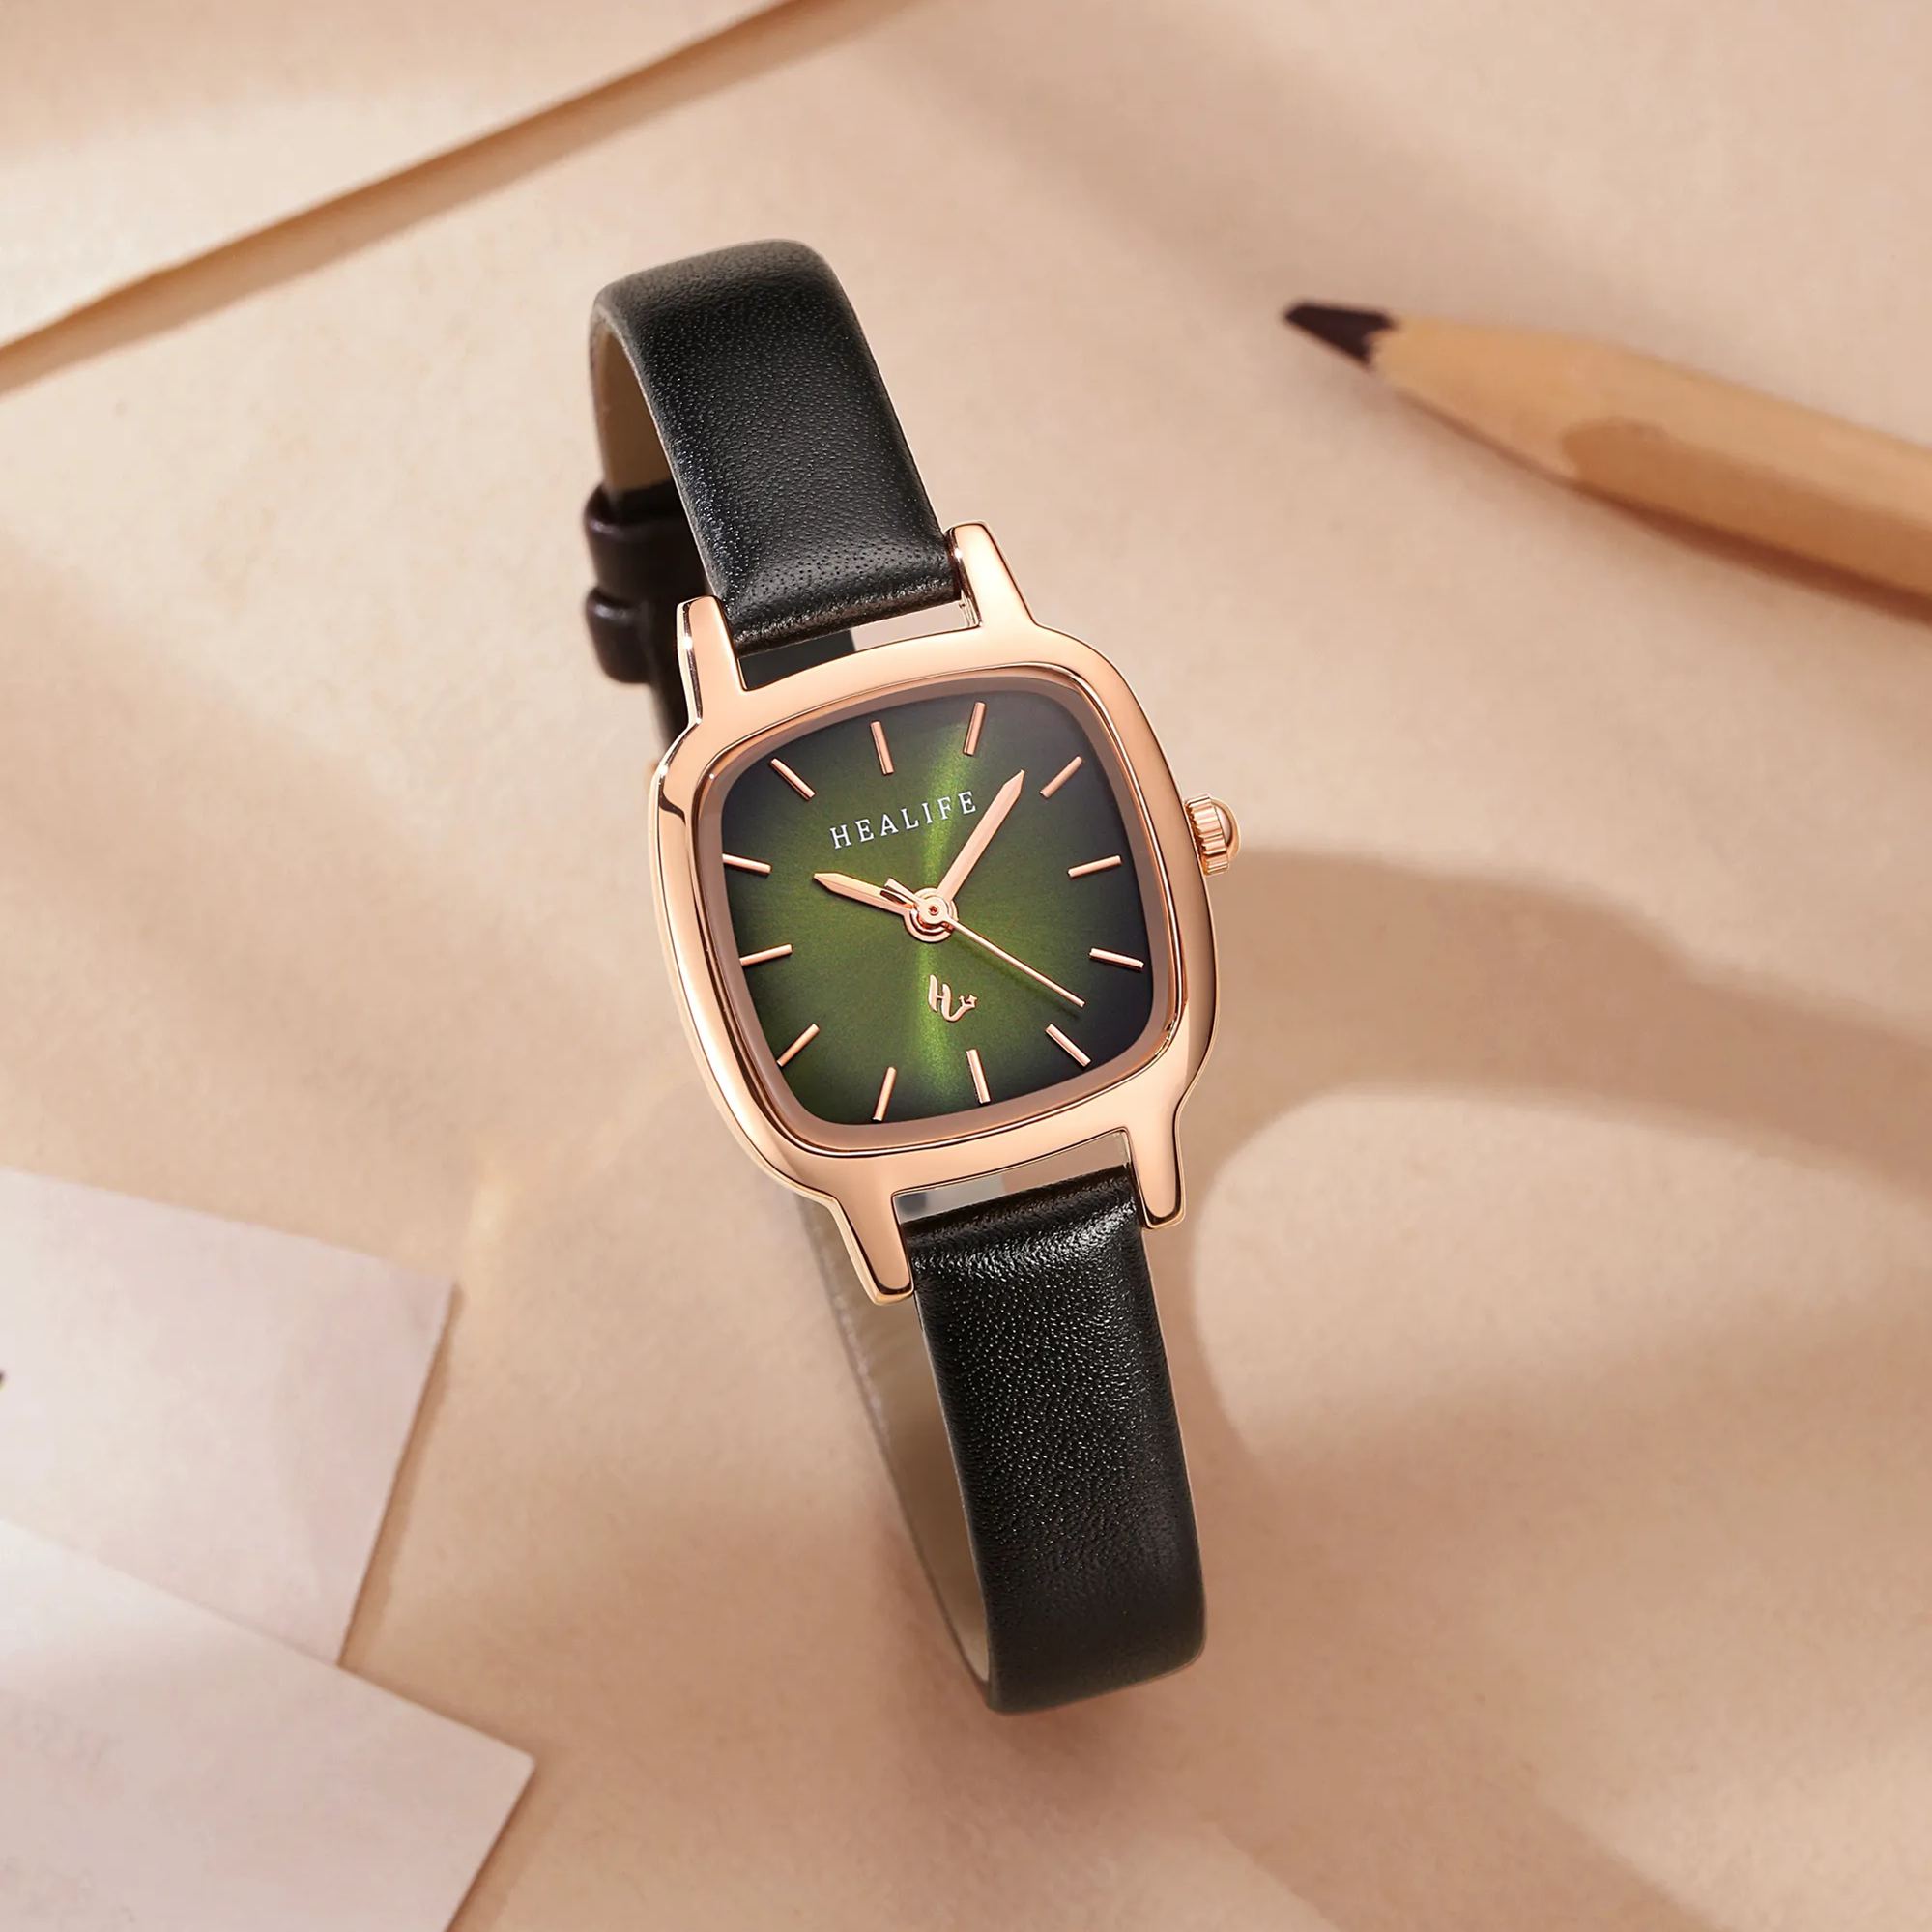 Healife Women's Watch Mini Green Geometric Art Simplicity Design For Gift-Giving Self-Occupied